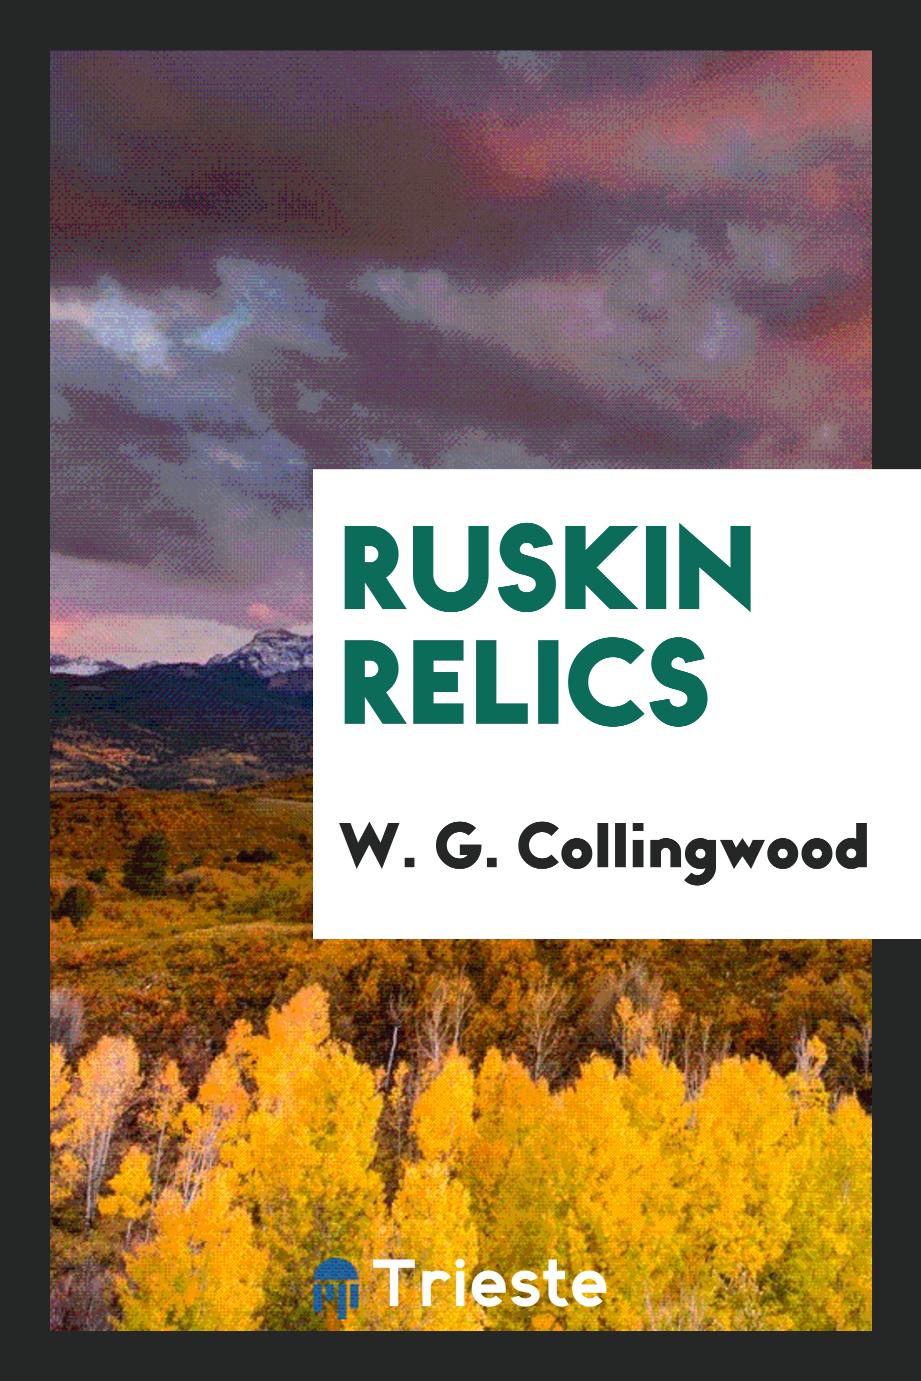 Ruskin relics